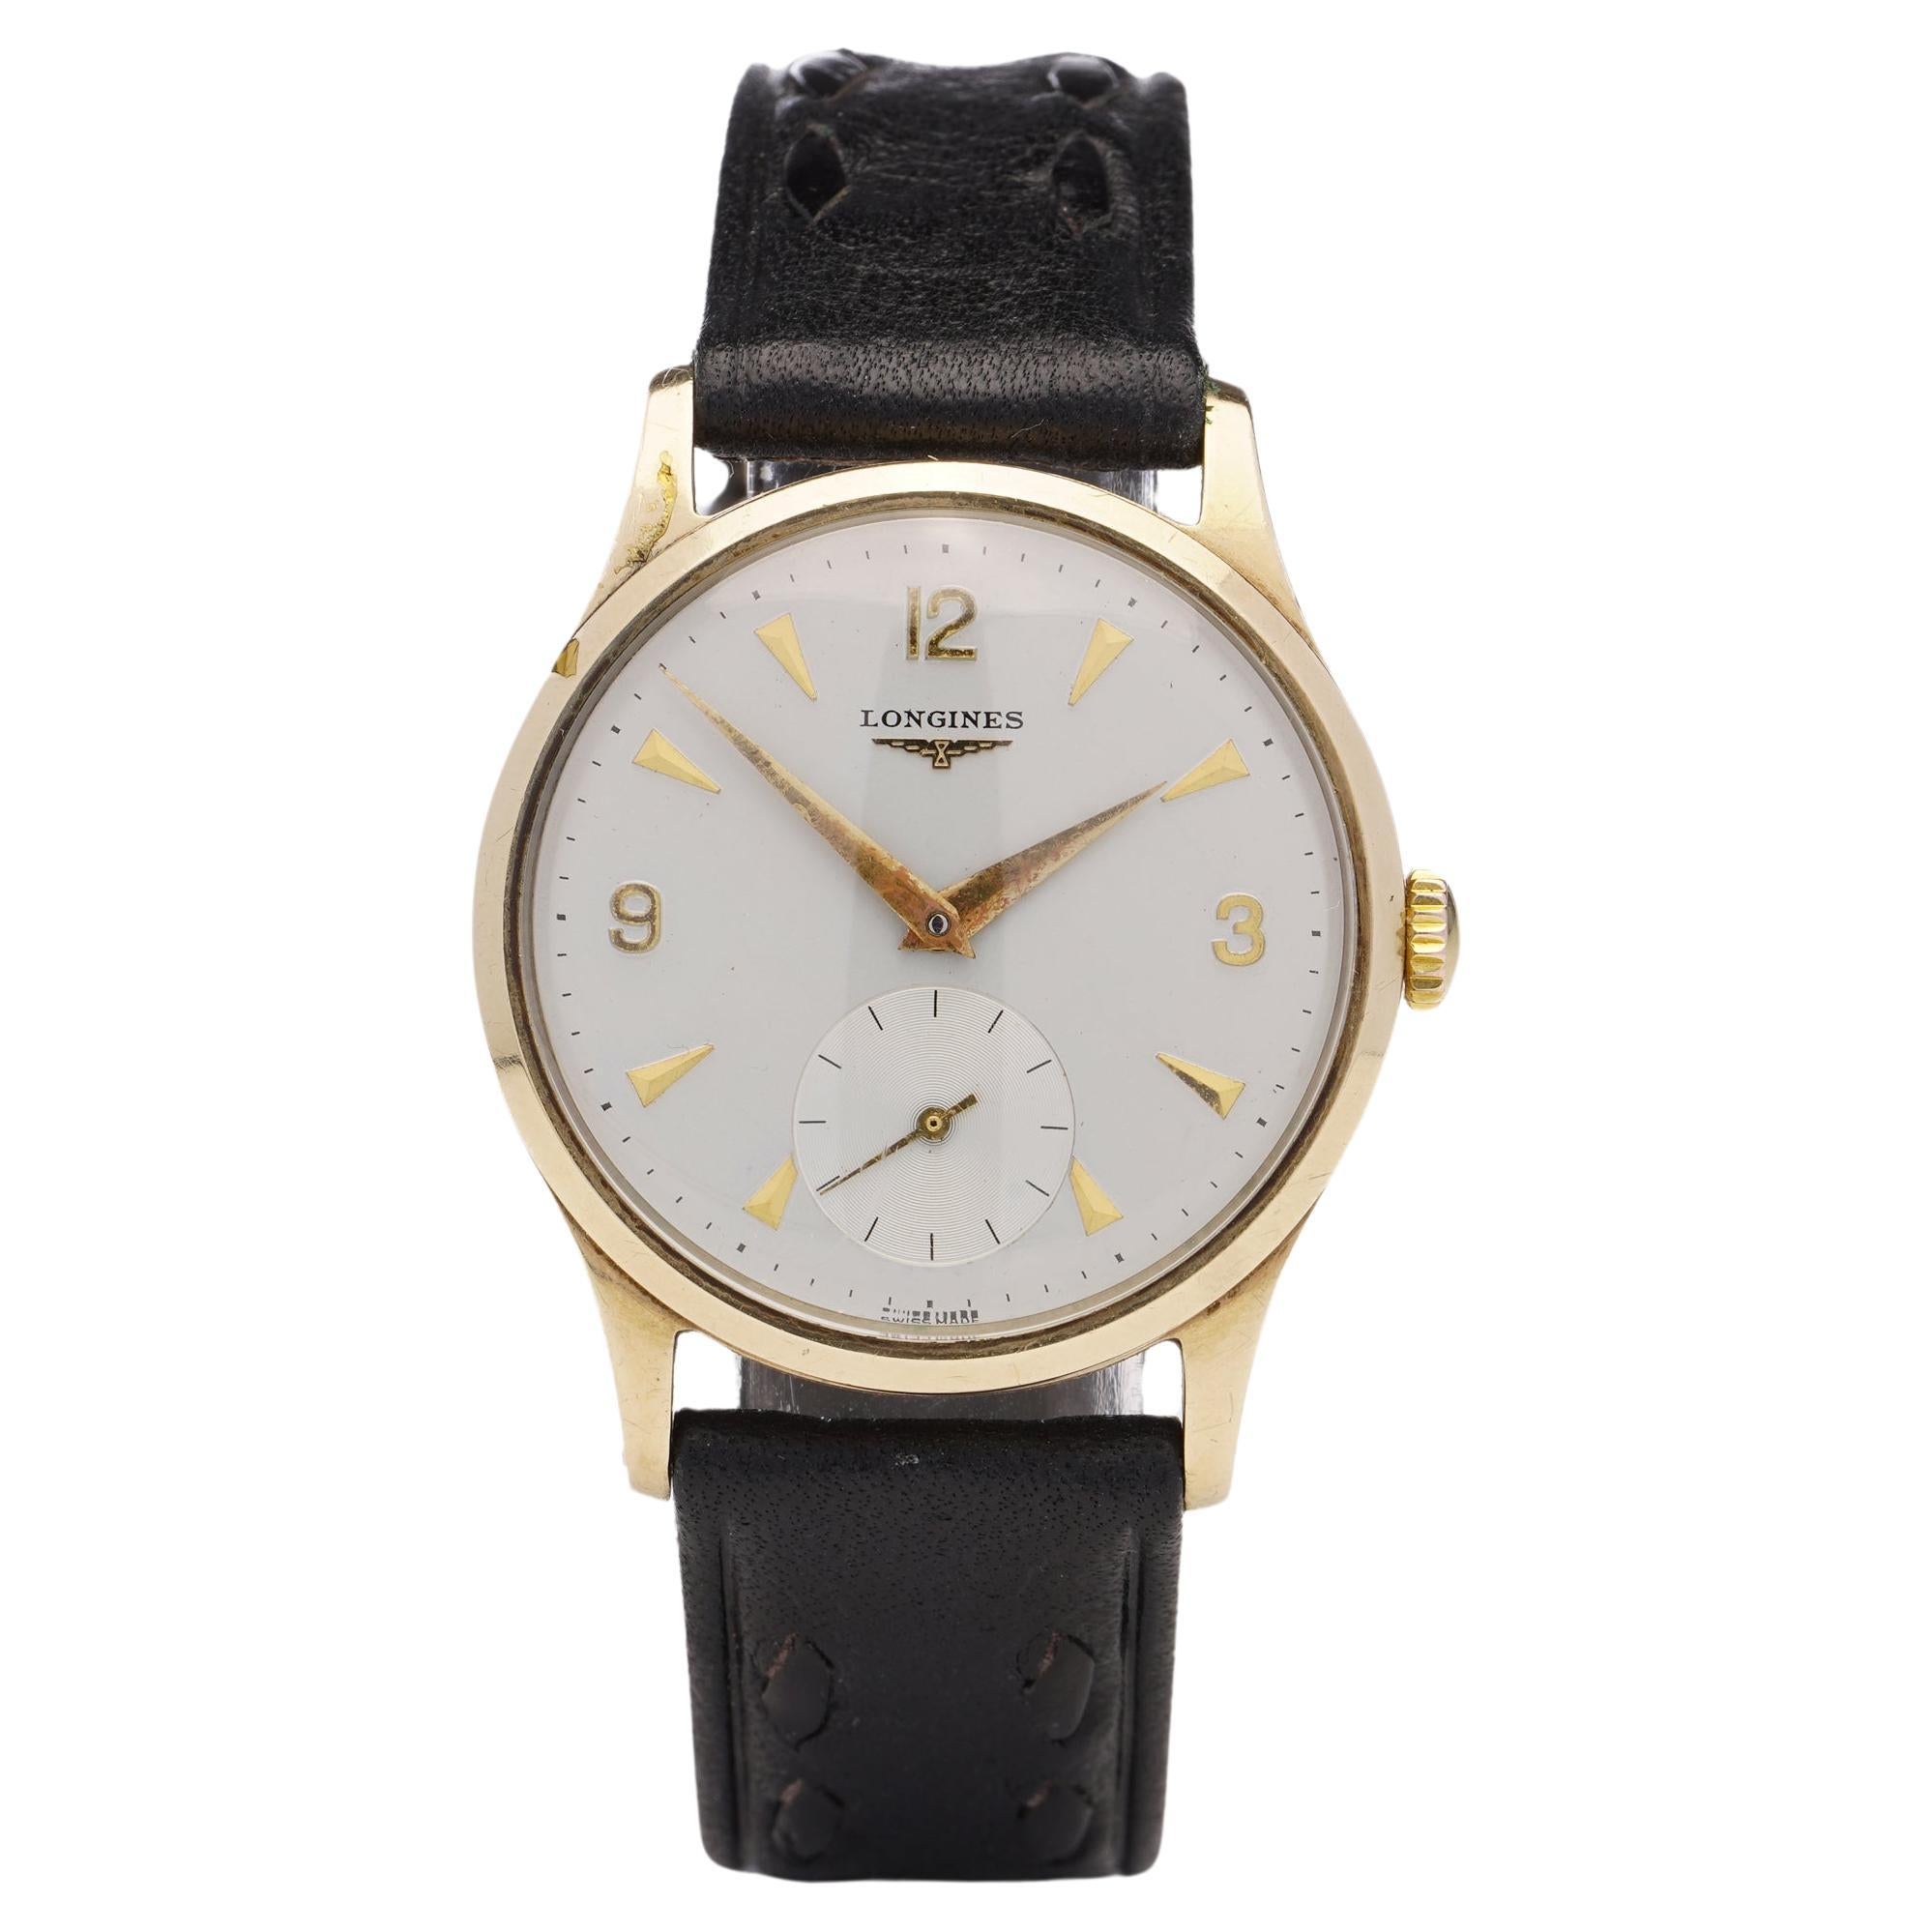 Longines 9kt. yellow gold men's manual winding wristwatch